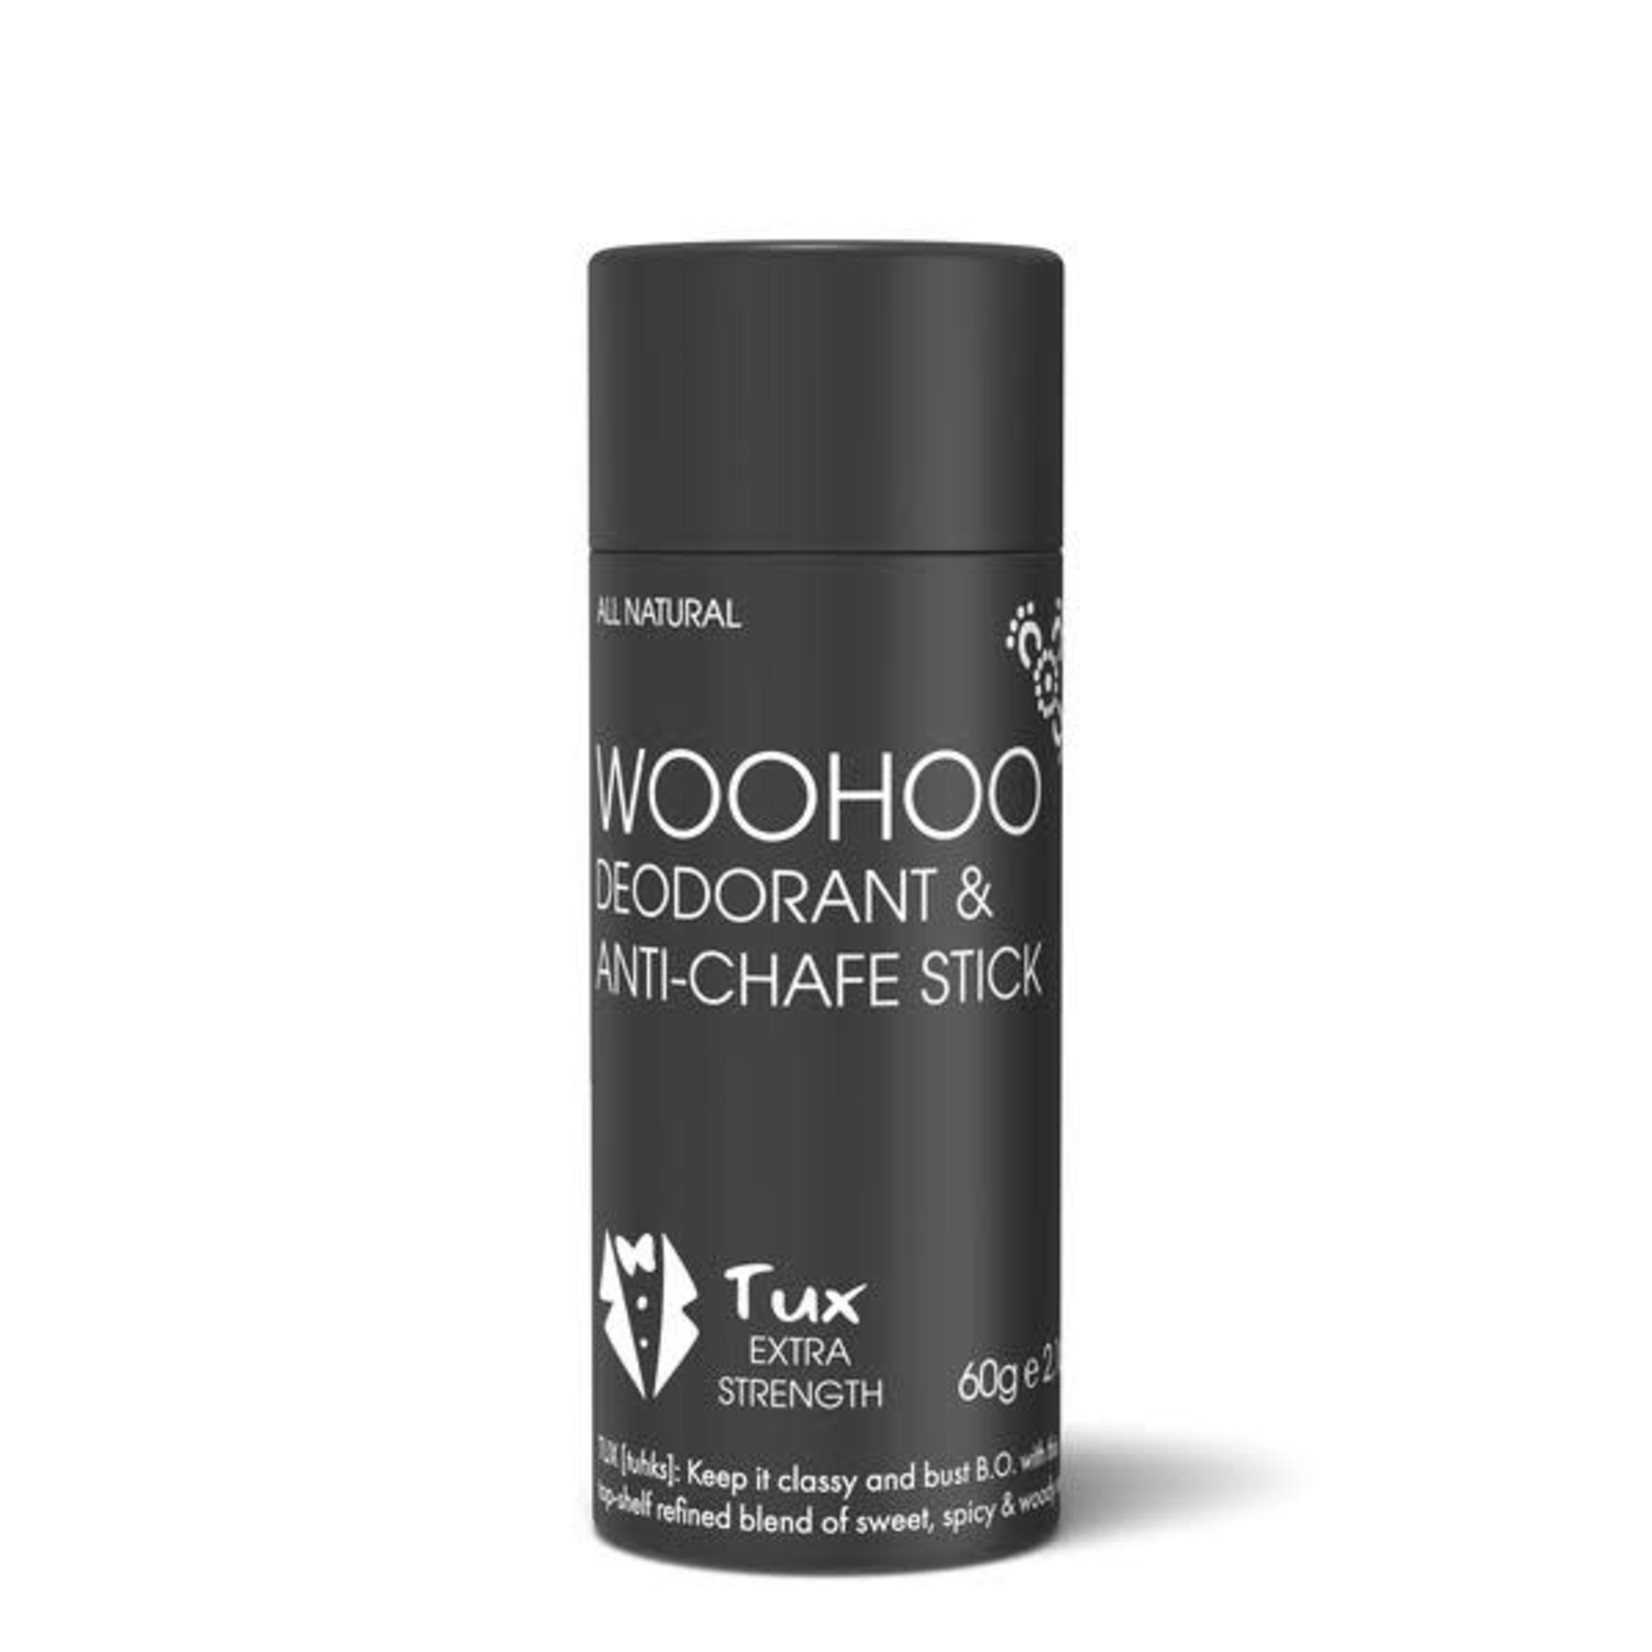 Woohoo Body Woohoo deodorant & anti-chafe stick Tux